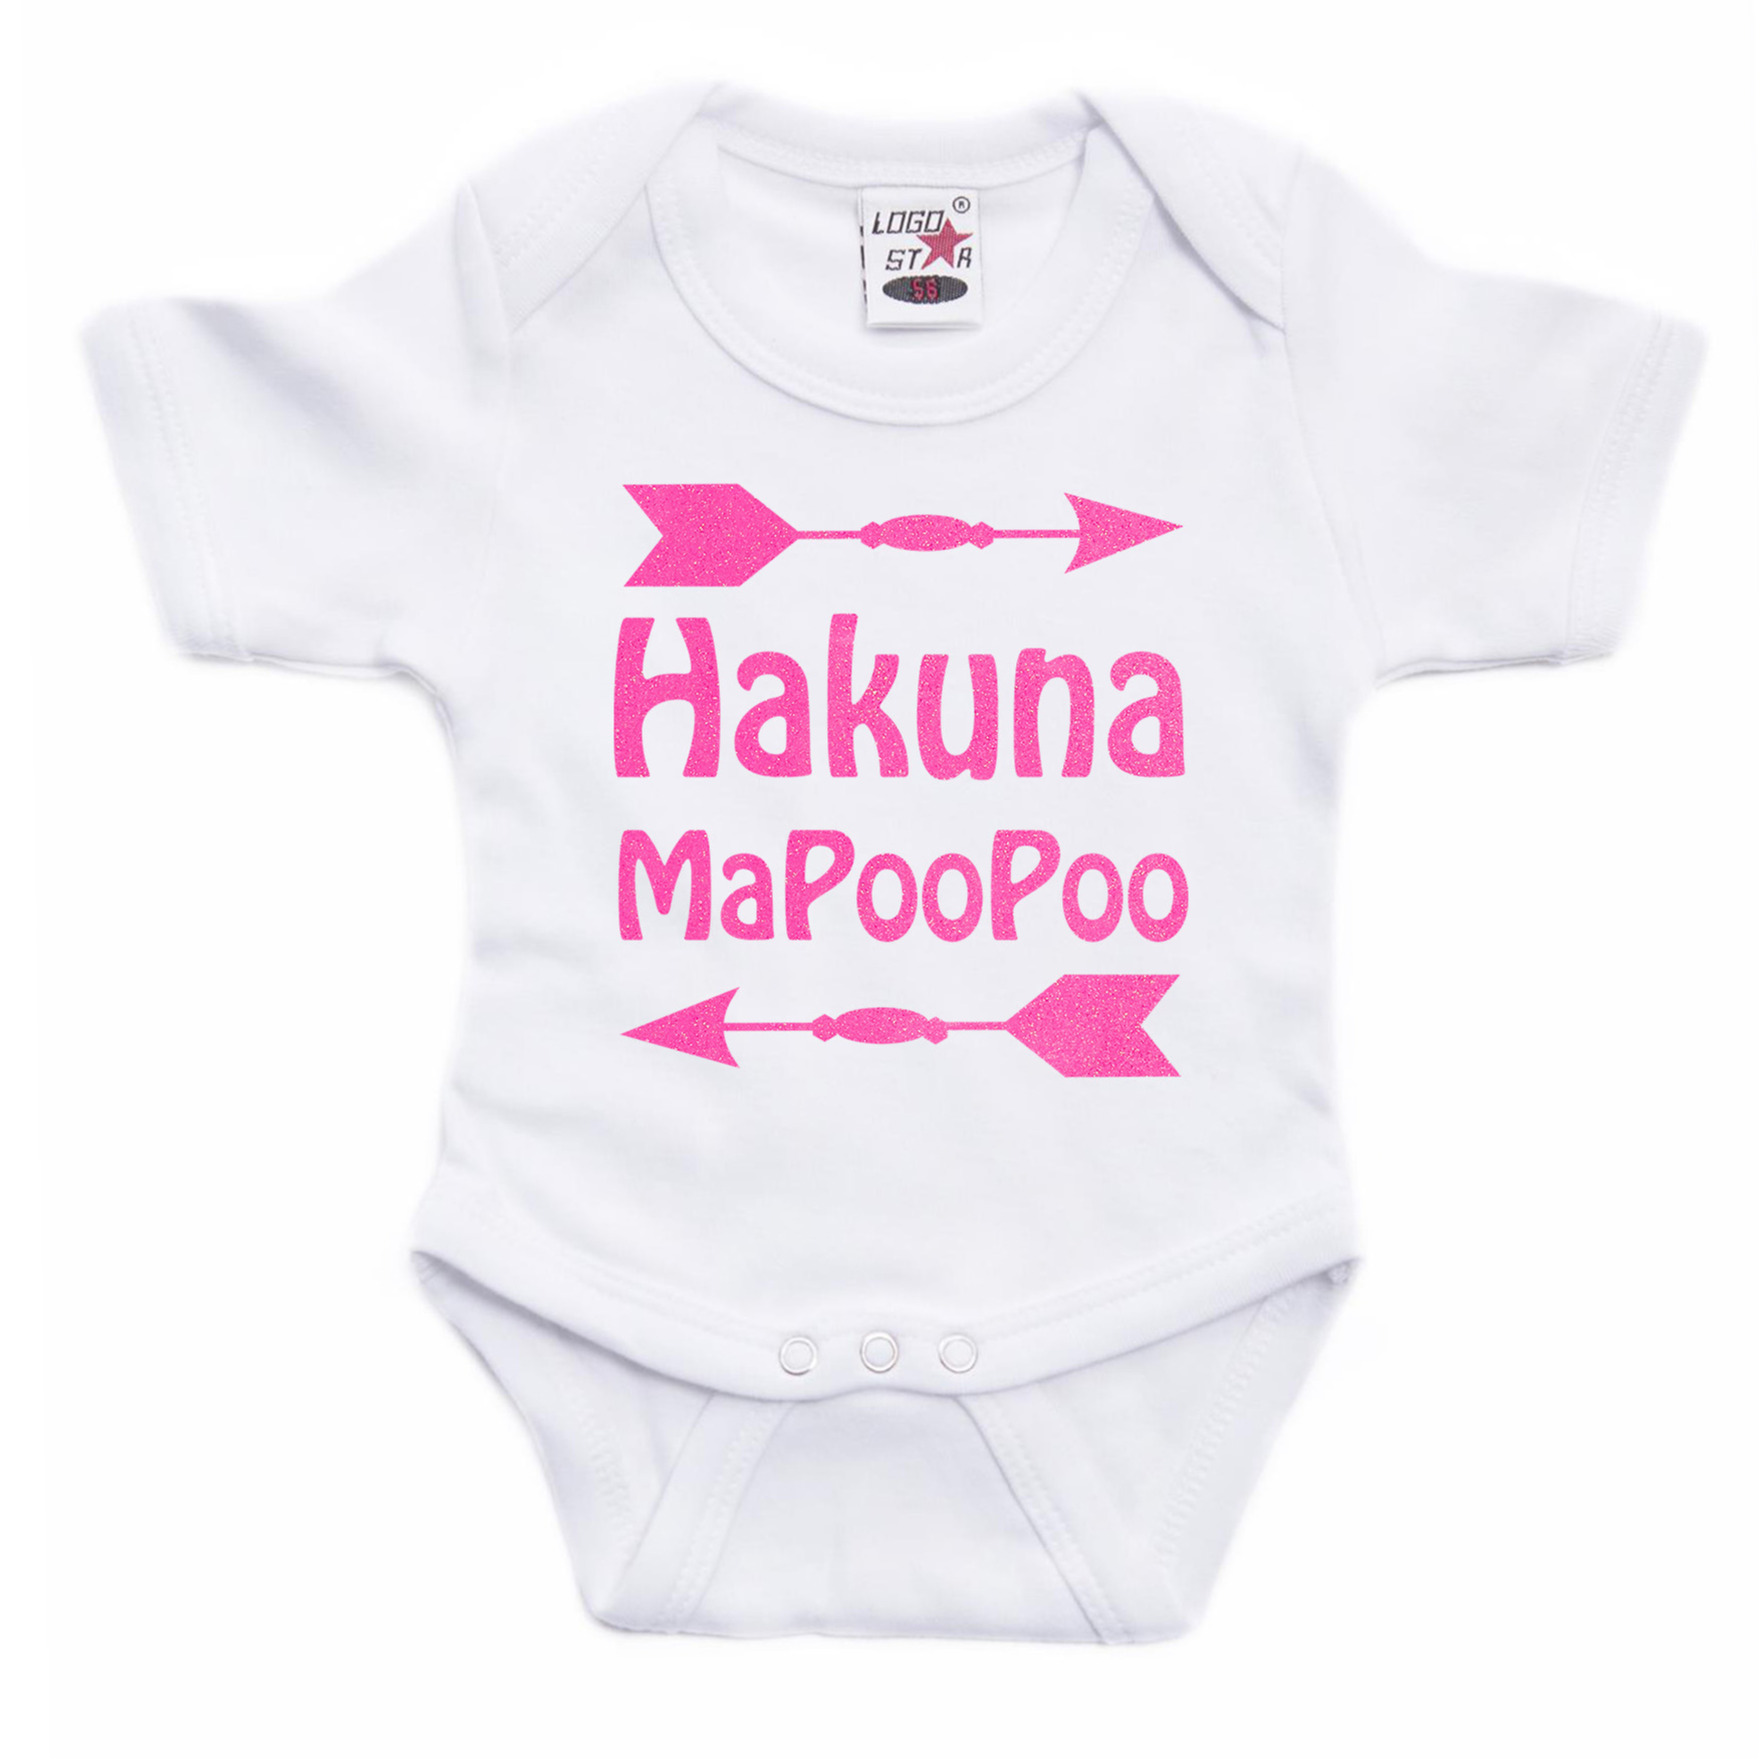 Baby rompertje hakuna mapoopoo roze glitter kraam cadeau babyshower